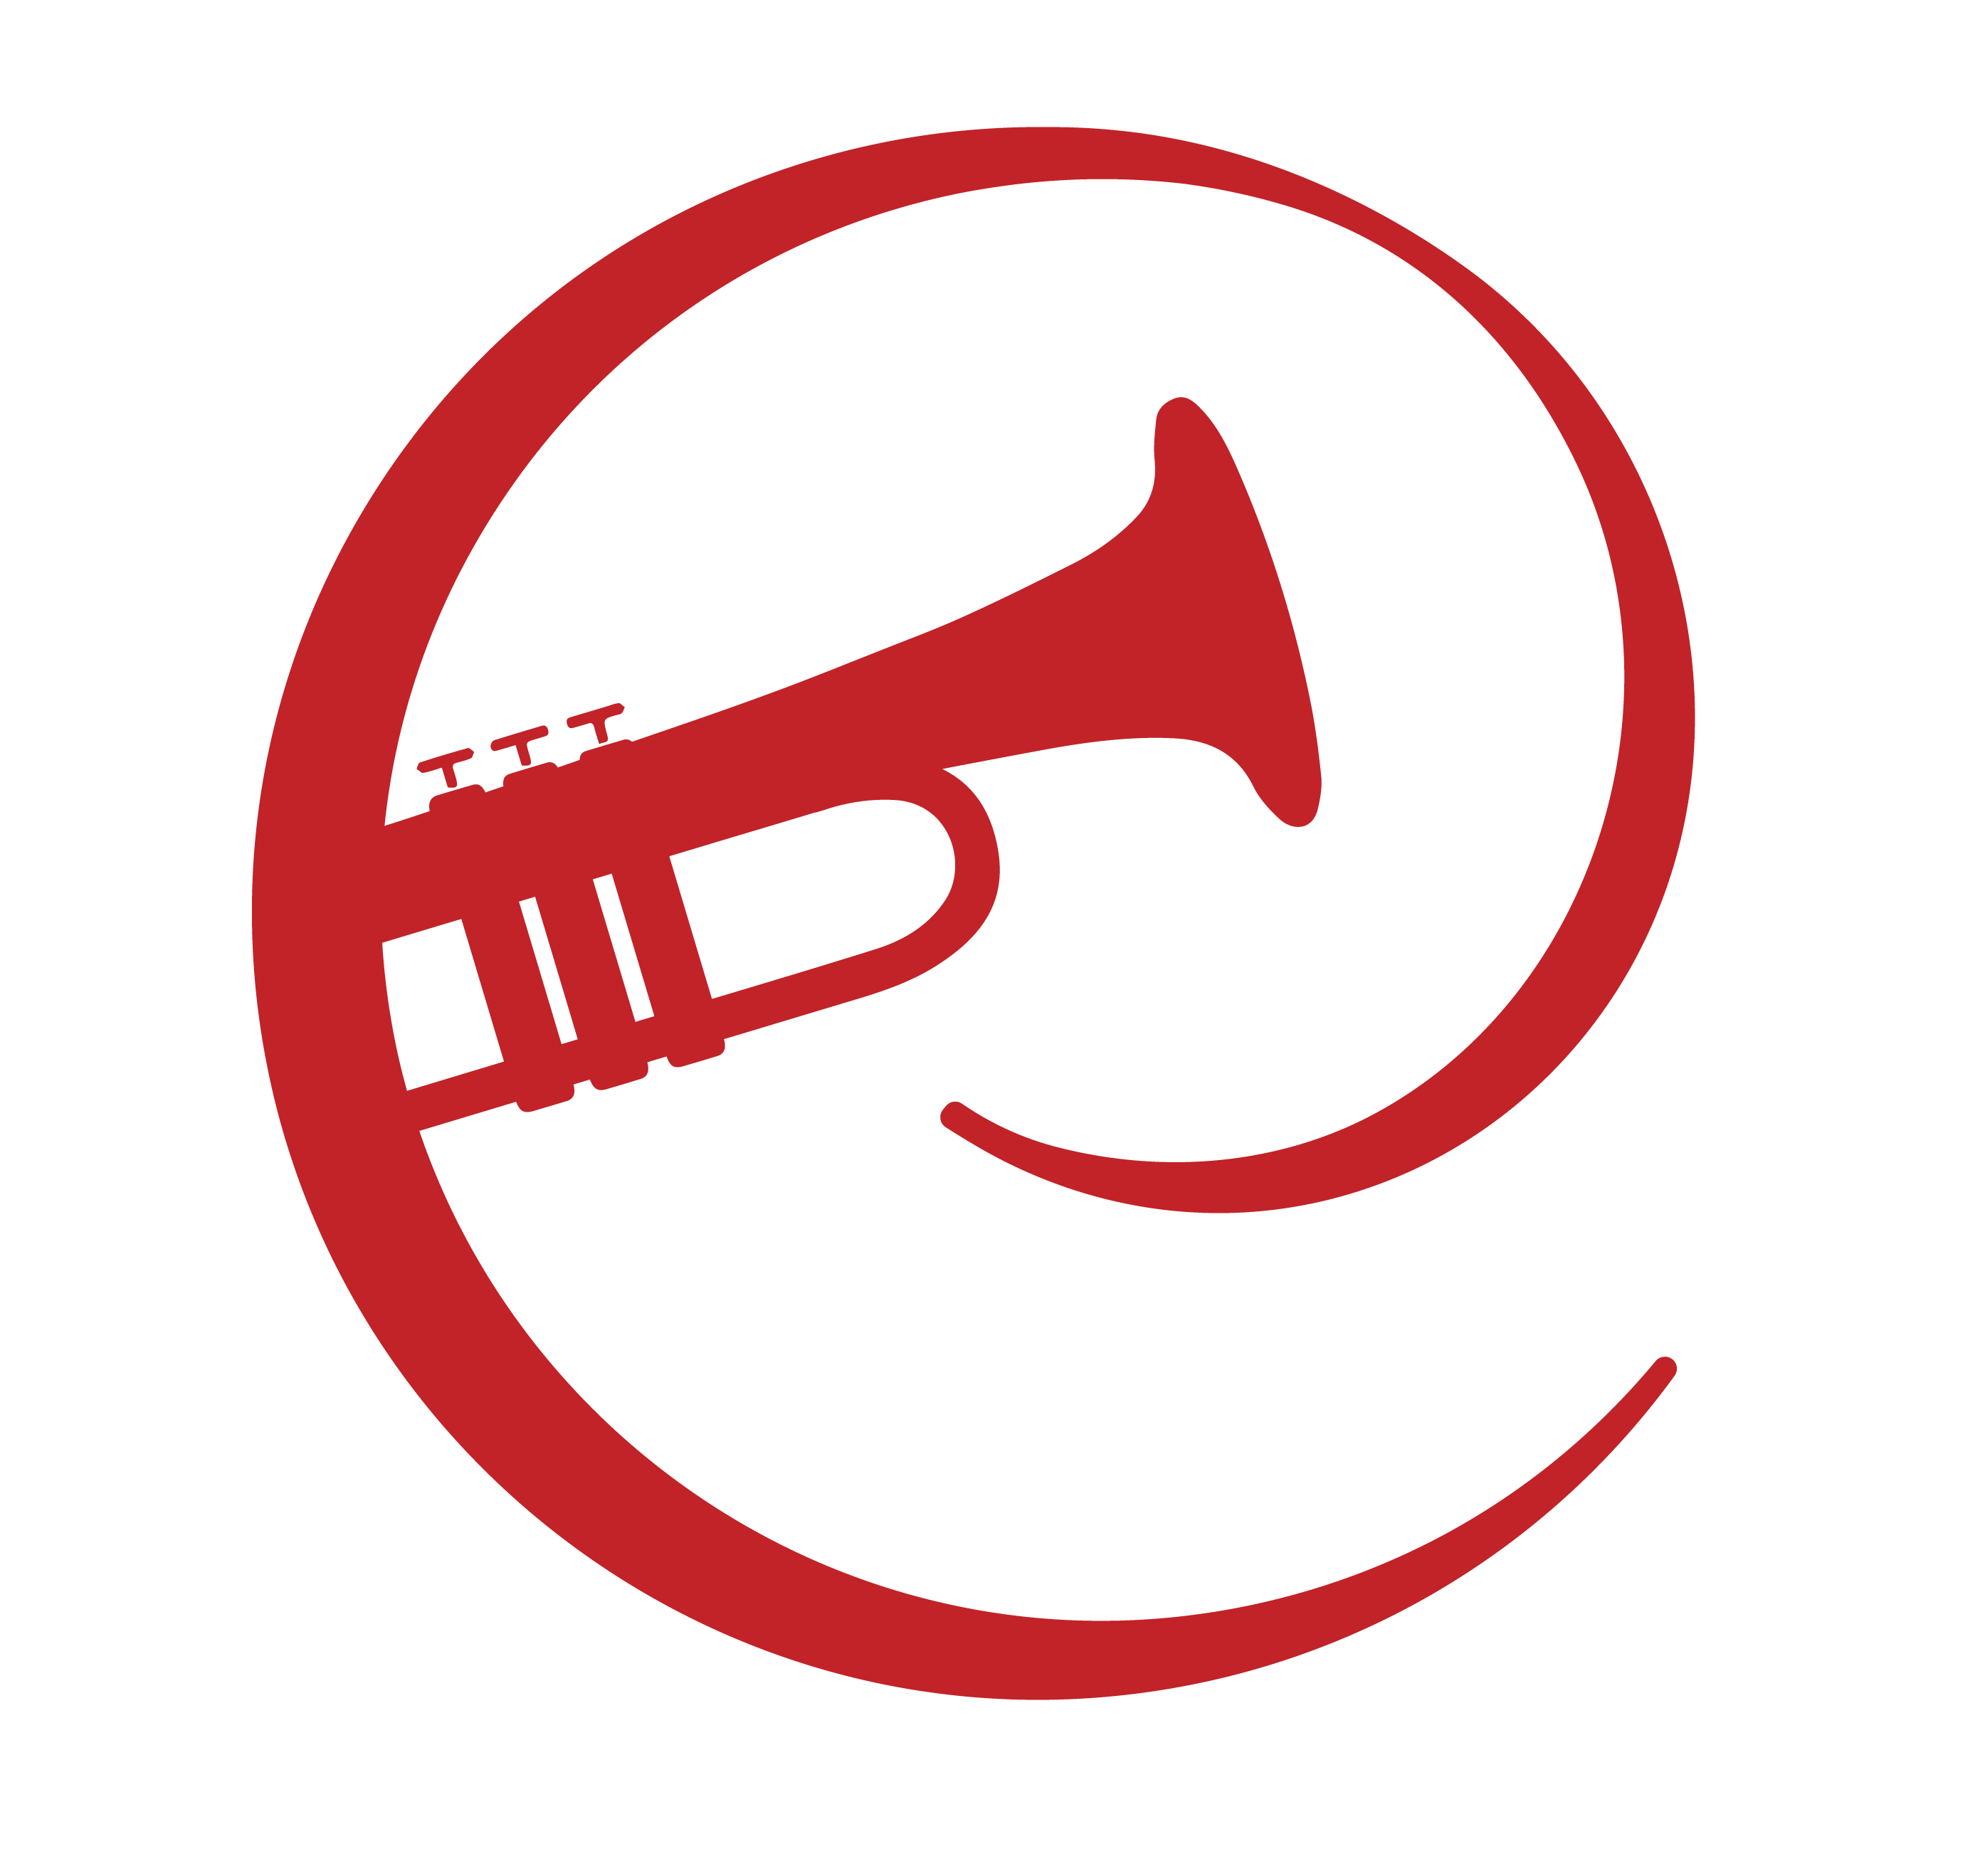 ce8div_E Logo Chili Red.png